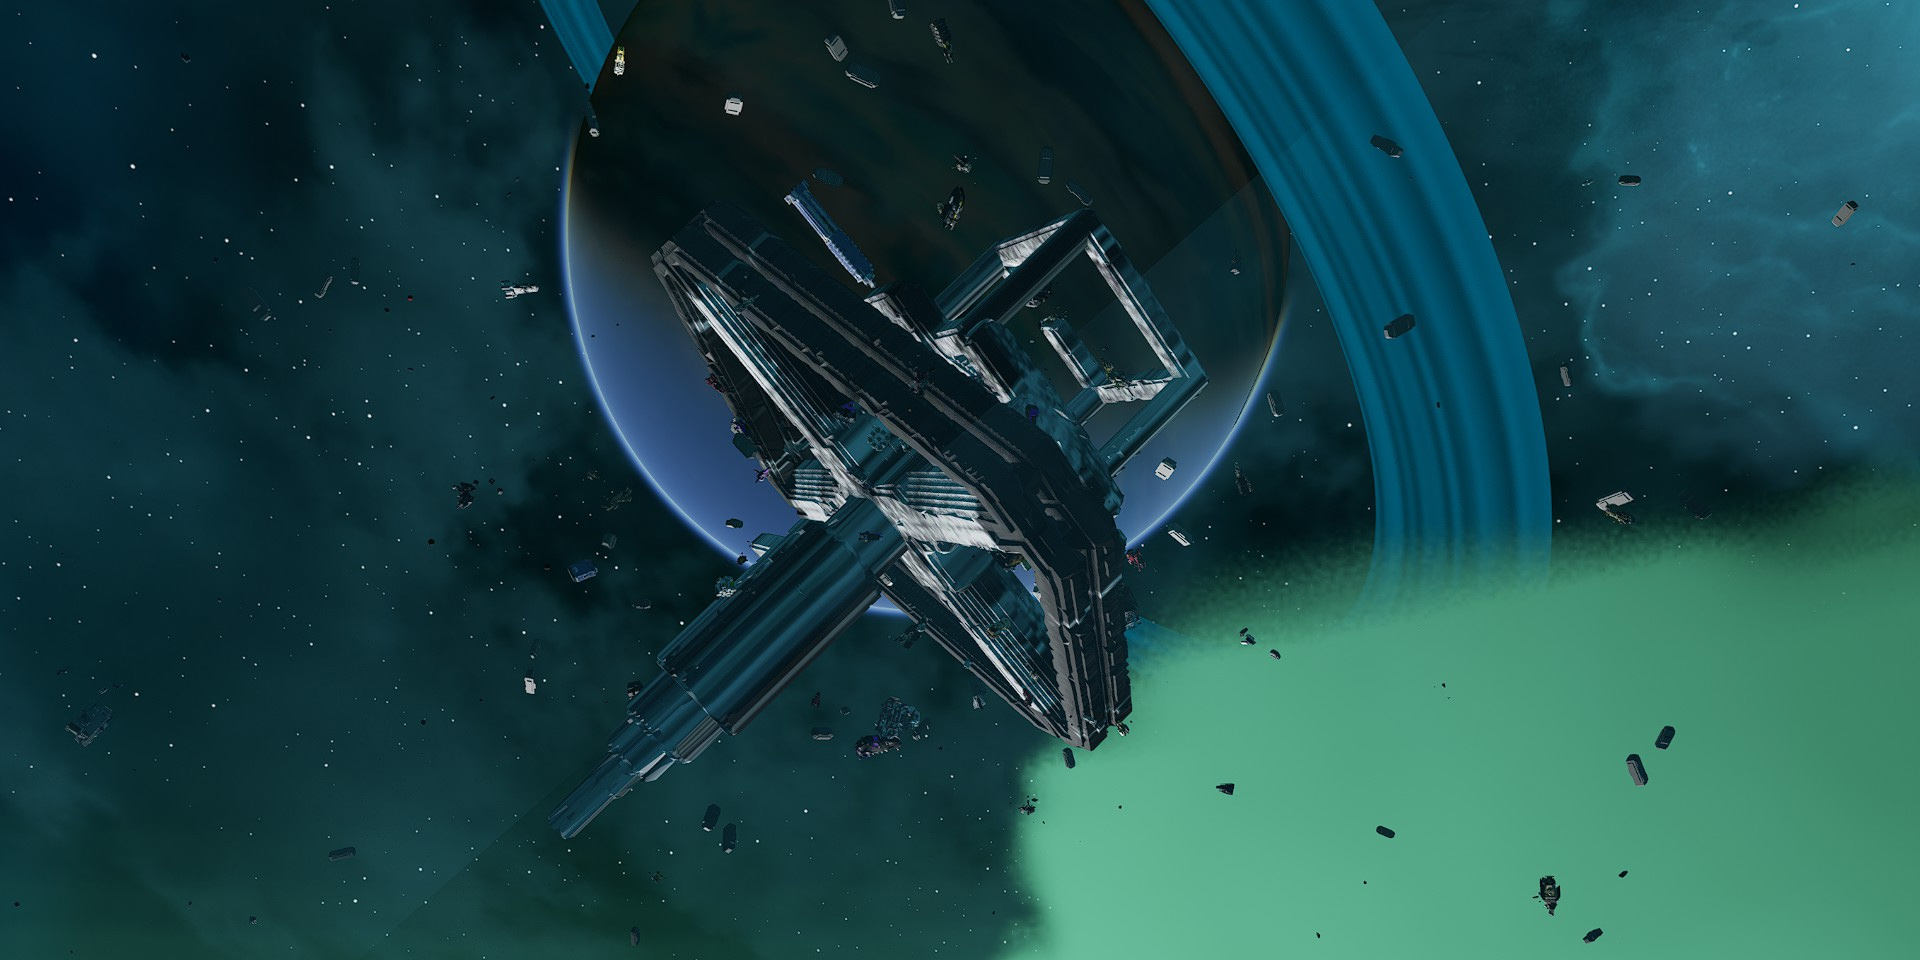 Starbase: Обновлённая дорожная карта